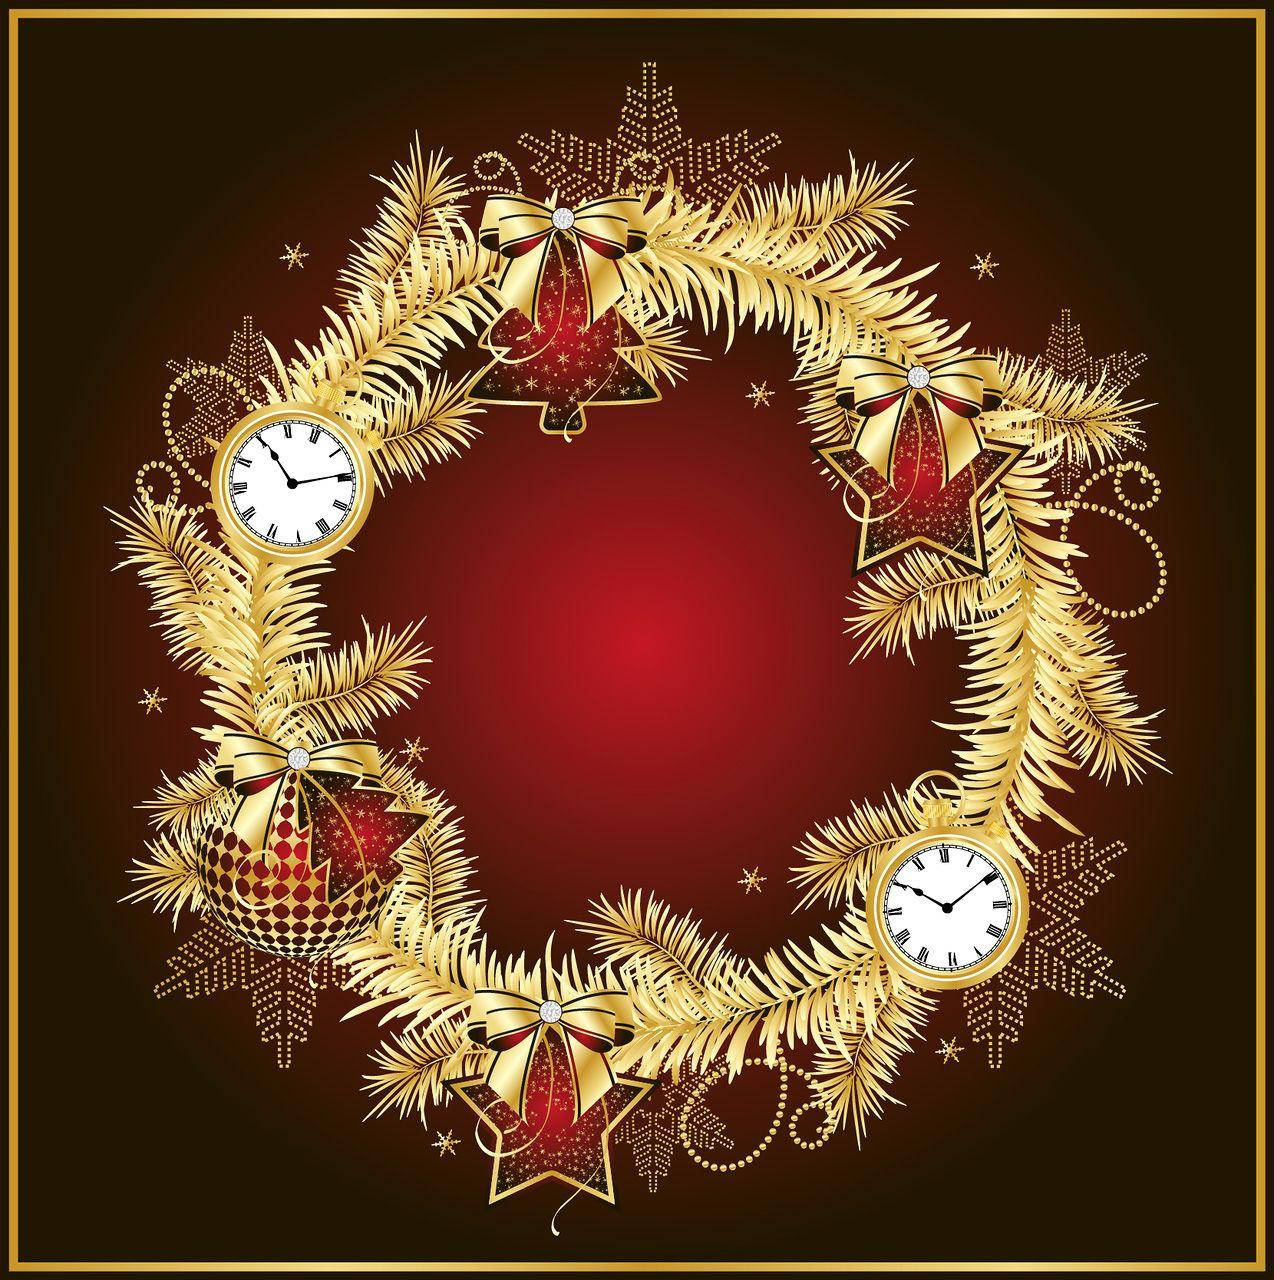 Exquisite Golden Christmas Wreath Background